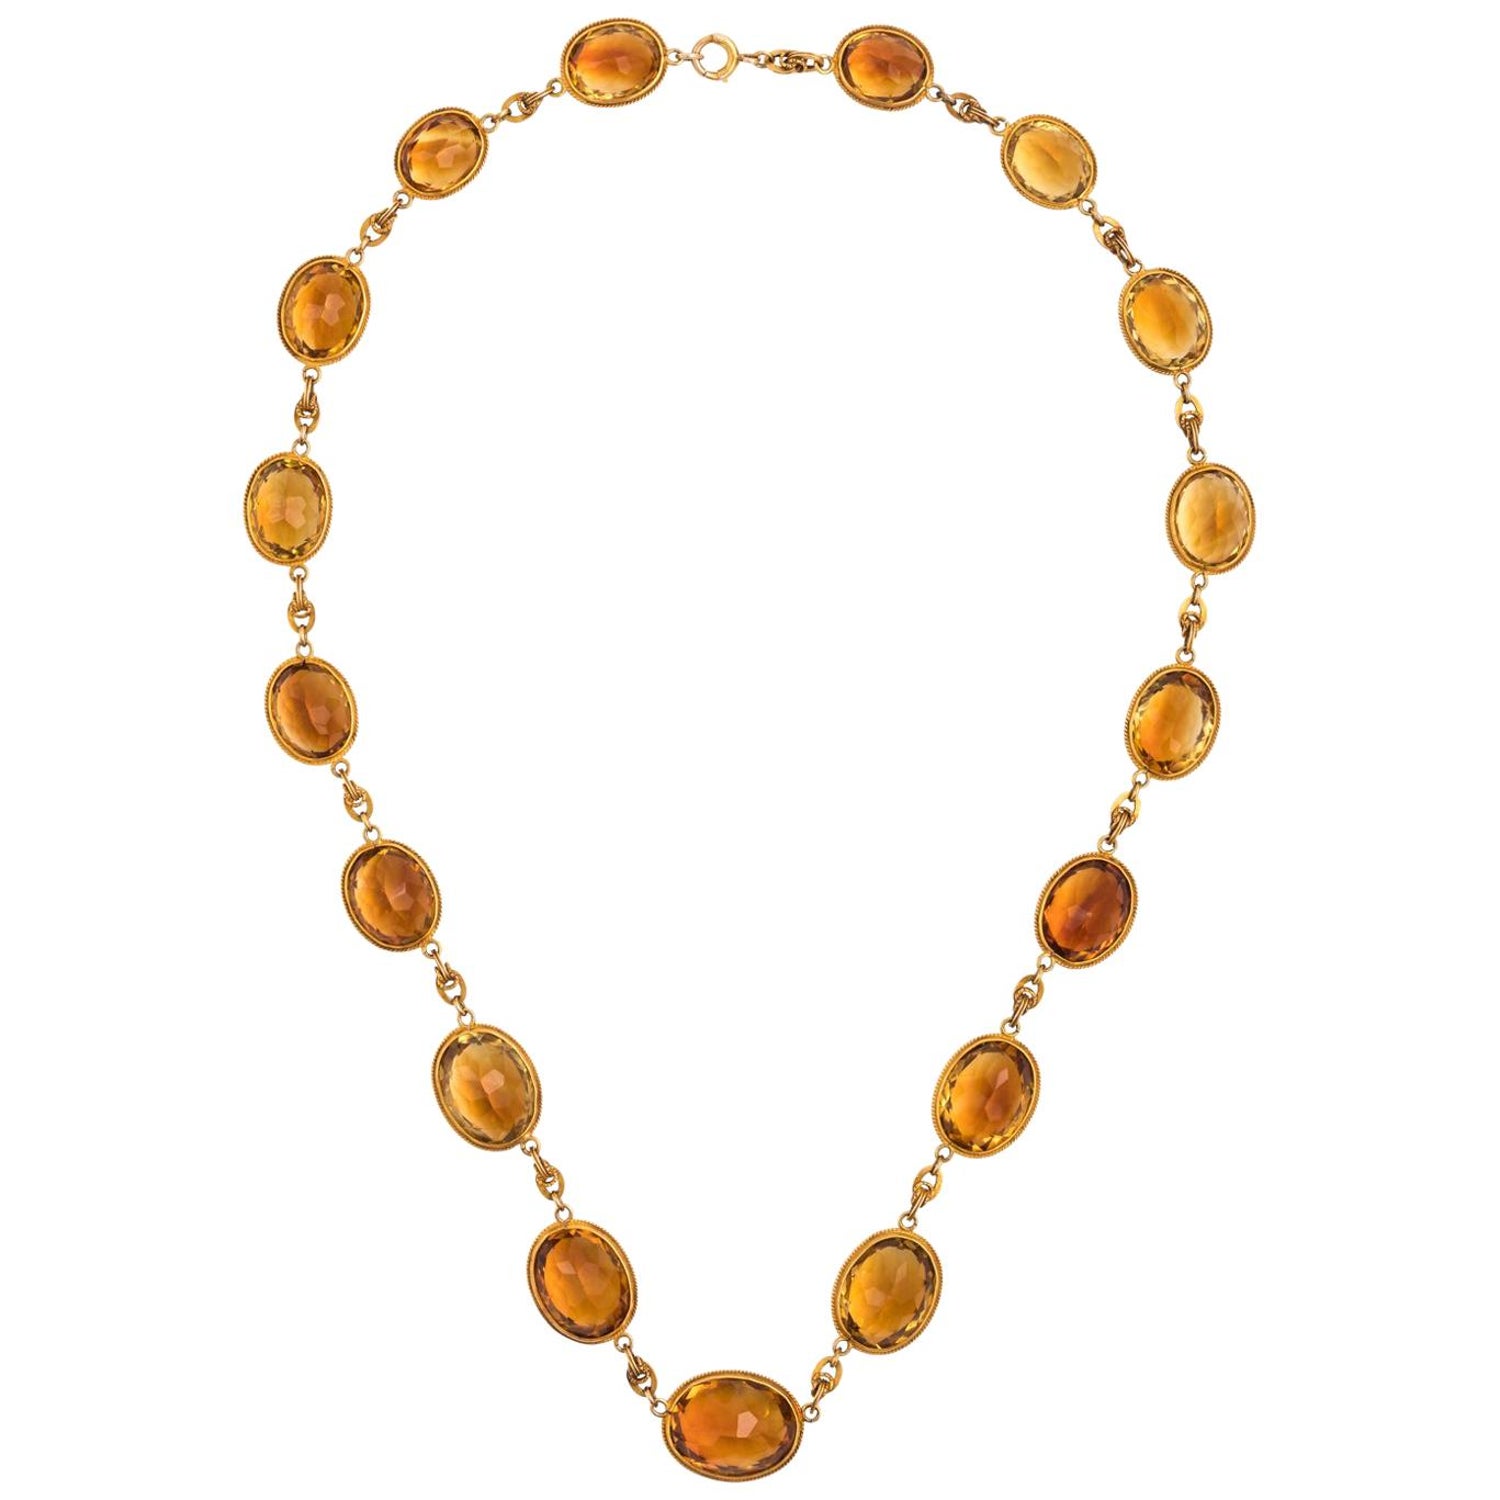 ALARRI 3.15 CTW 14K Solid Gold Felicita Garnet Citrine Necklace with 18 Inch Chain Length 